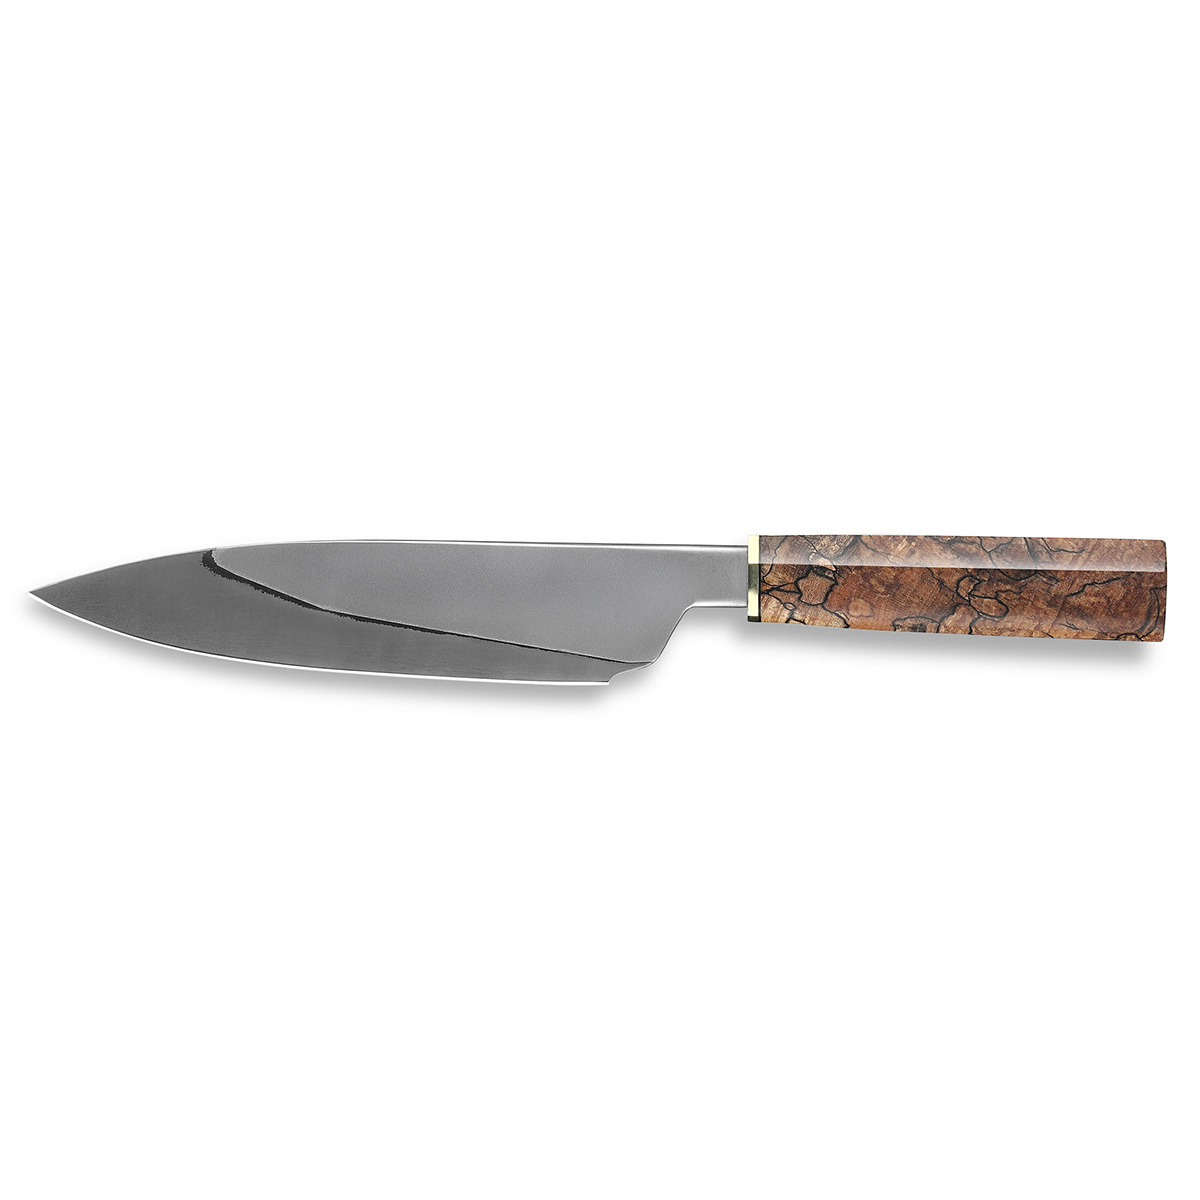 Нож кухонный Xin Cutlery Chef XC139 205мм, сталь 440C/410, рукоять Spalted Maple